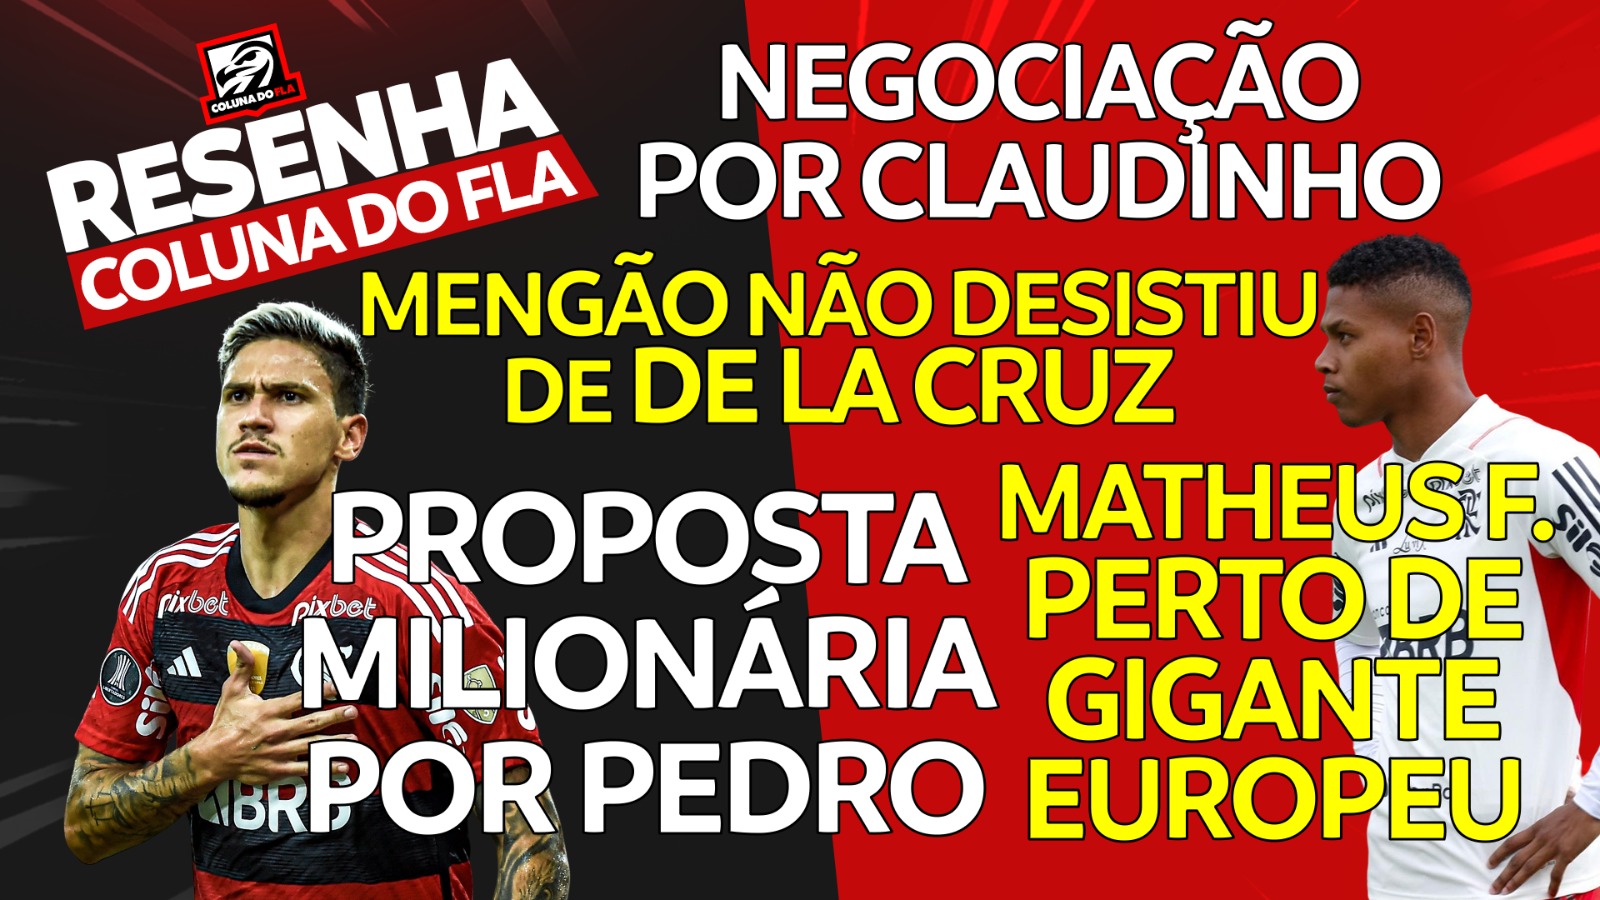 Coluna do Fla / Flamengo 